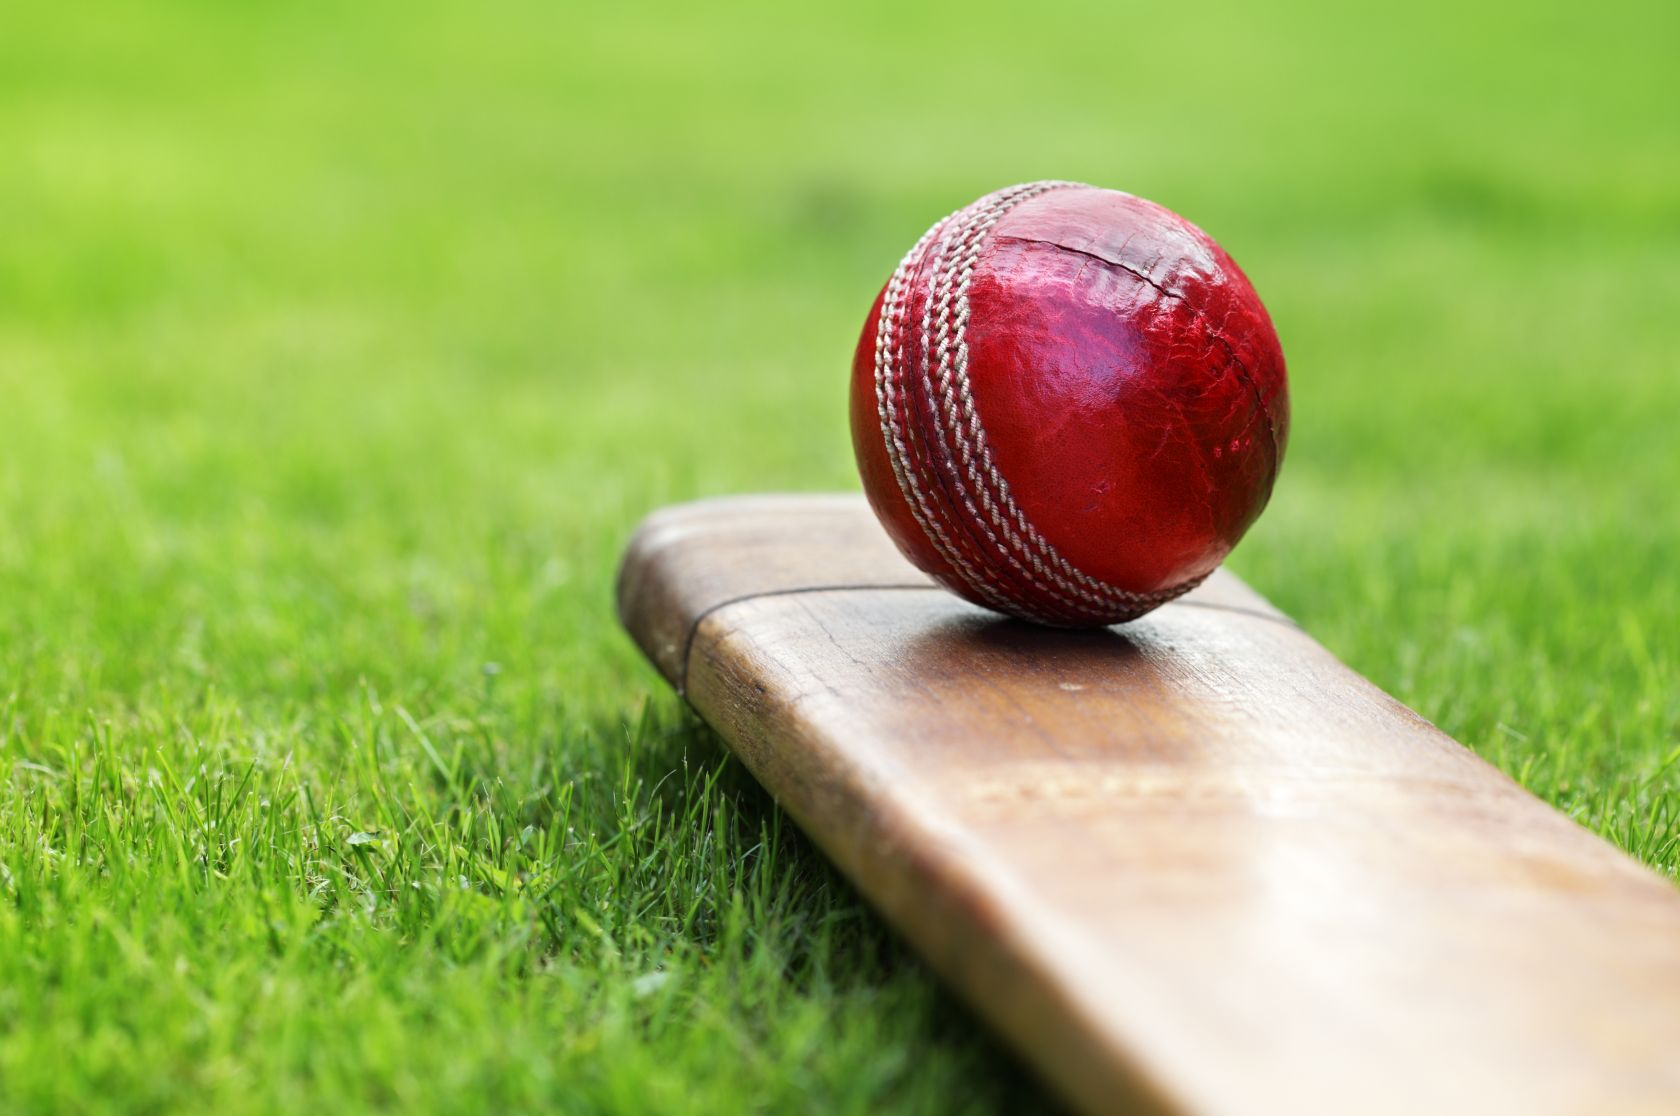 Cricket deaths detailed in new research, News, La Trobe University